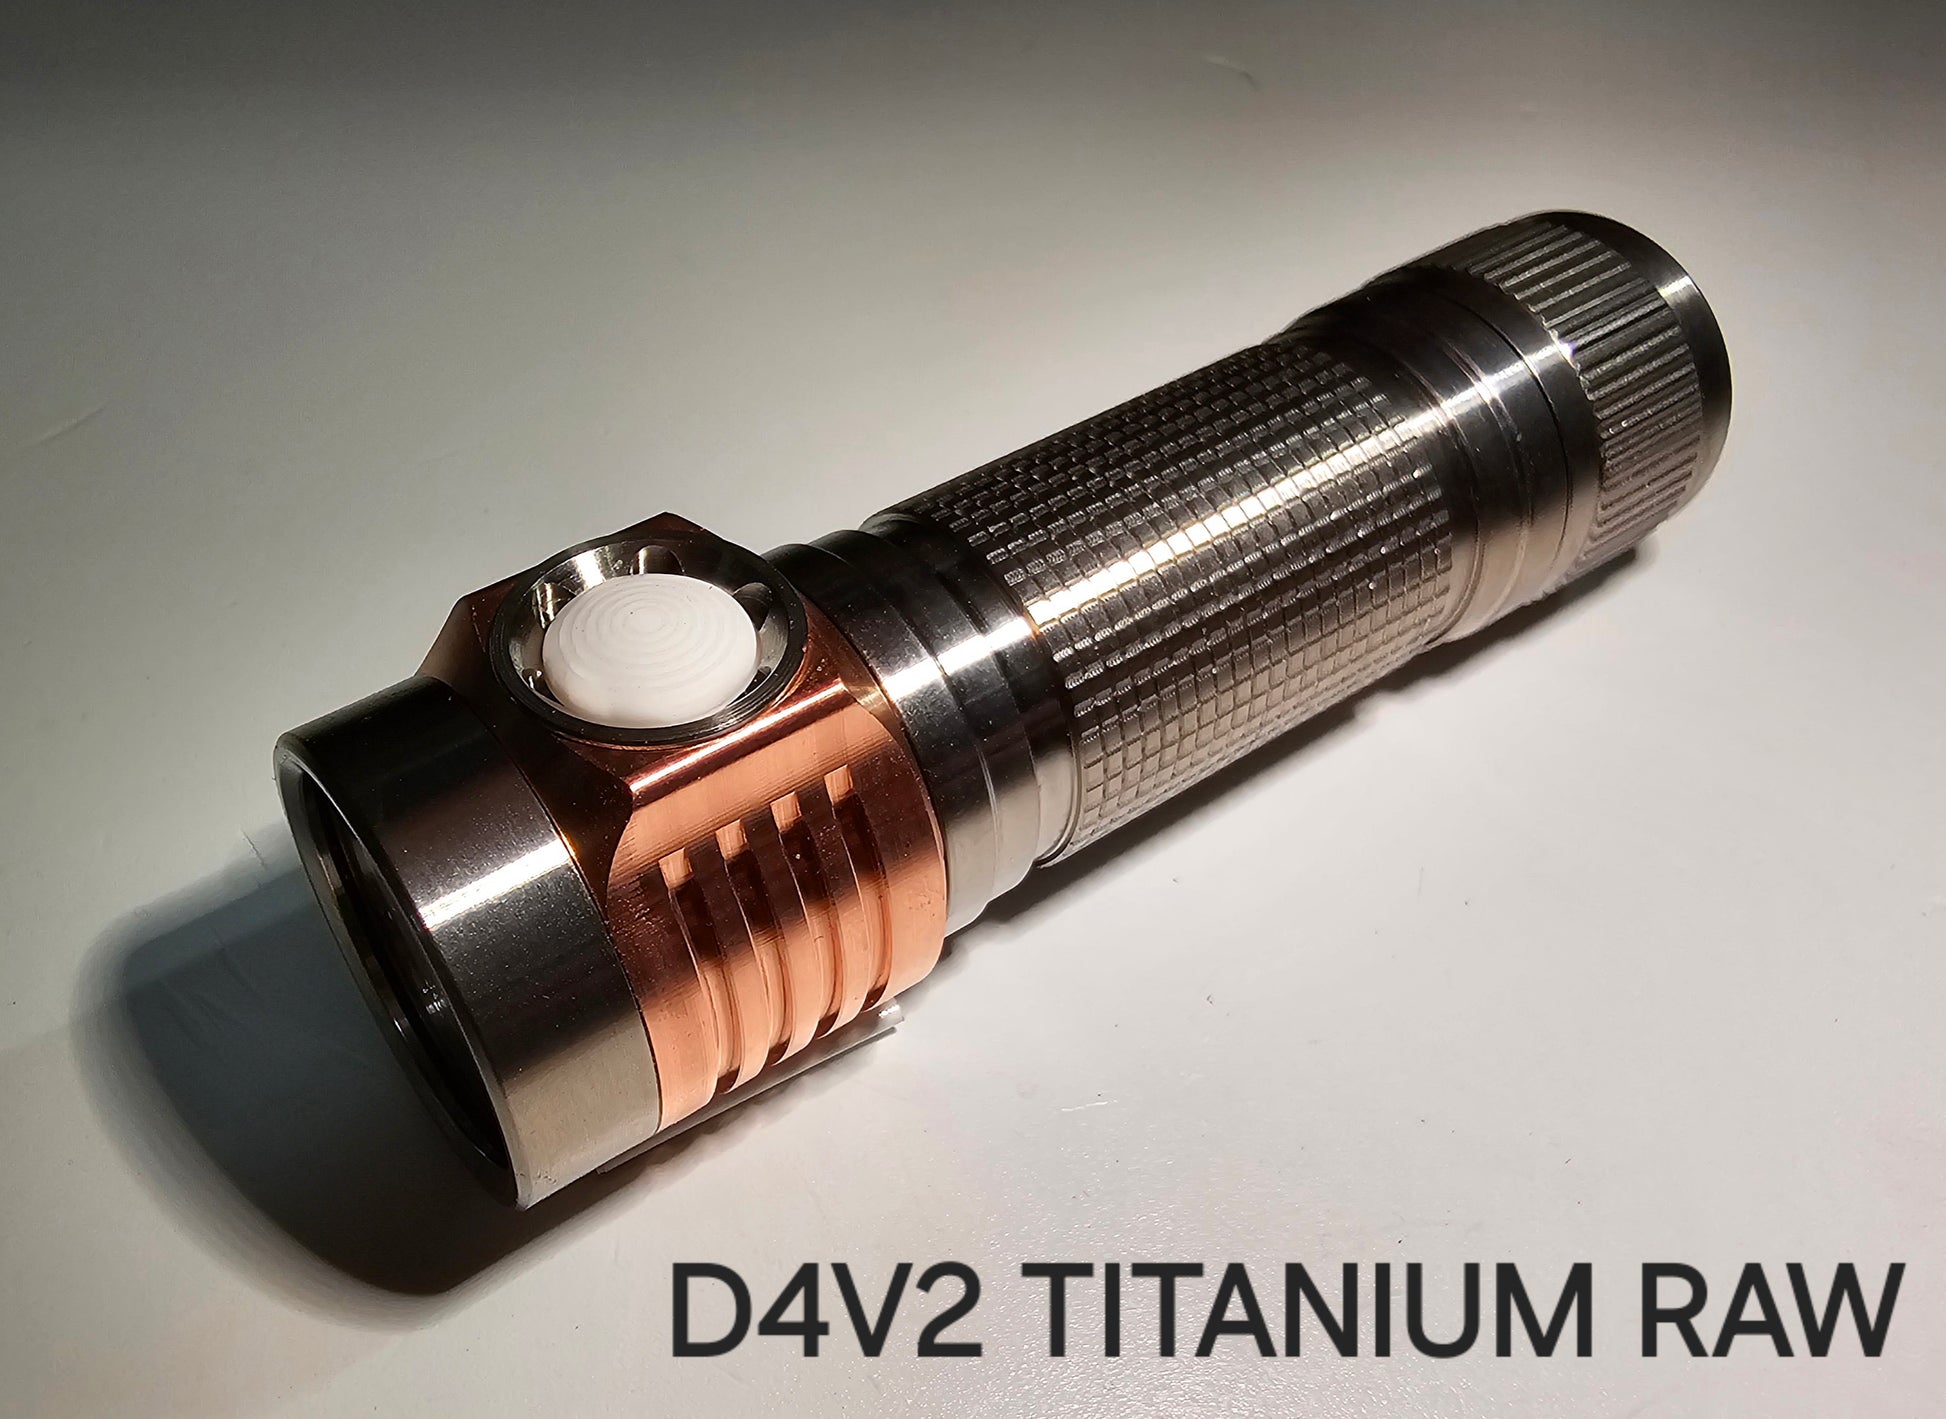 Emisar D4v2 Titanium Tint Ramp & Instant Channel Switching High Power LED Flashlight *CUSTOM BUILD-TO-ORDER* RAW TITANIUM